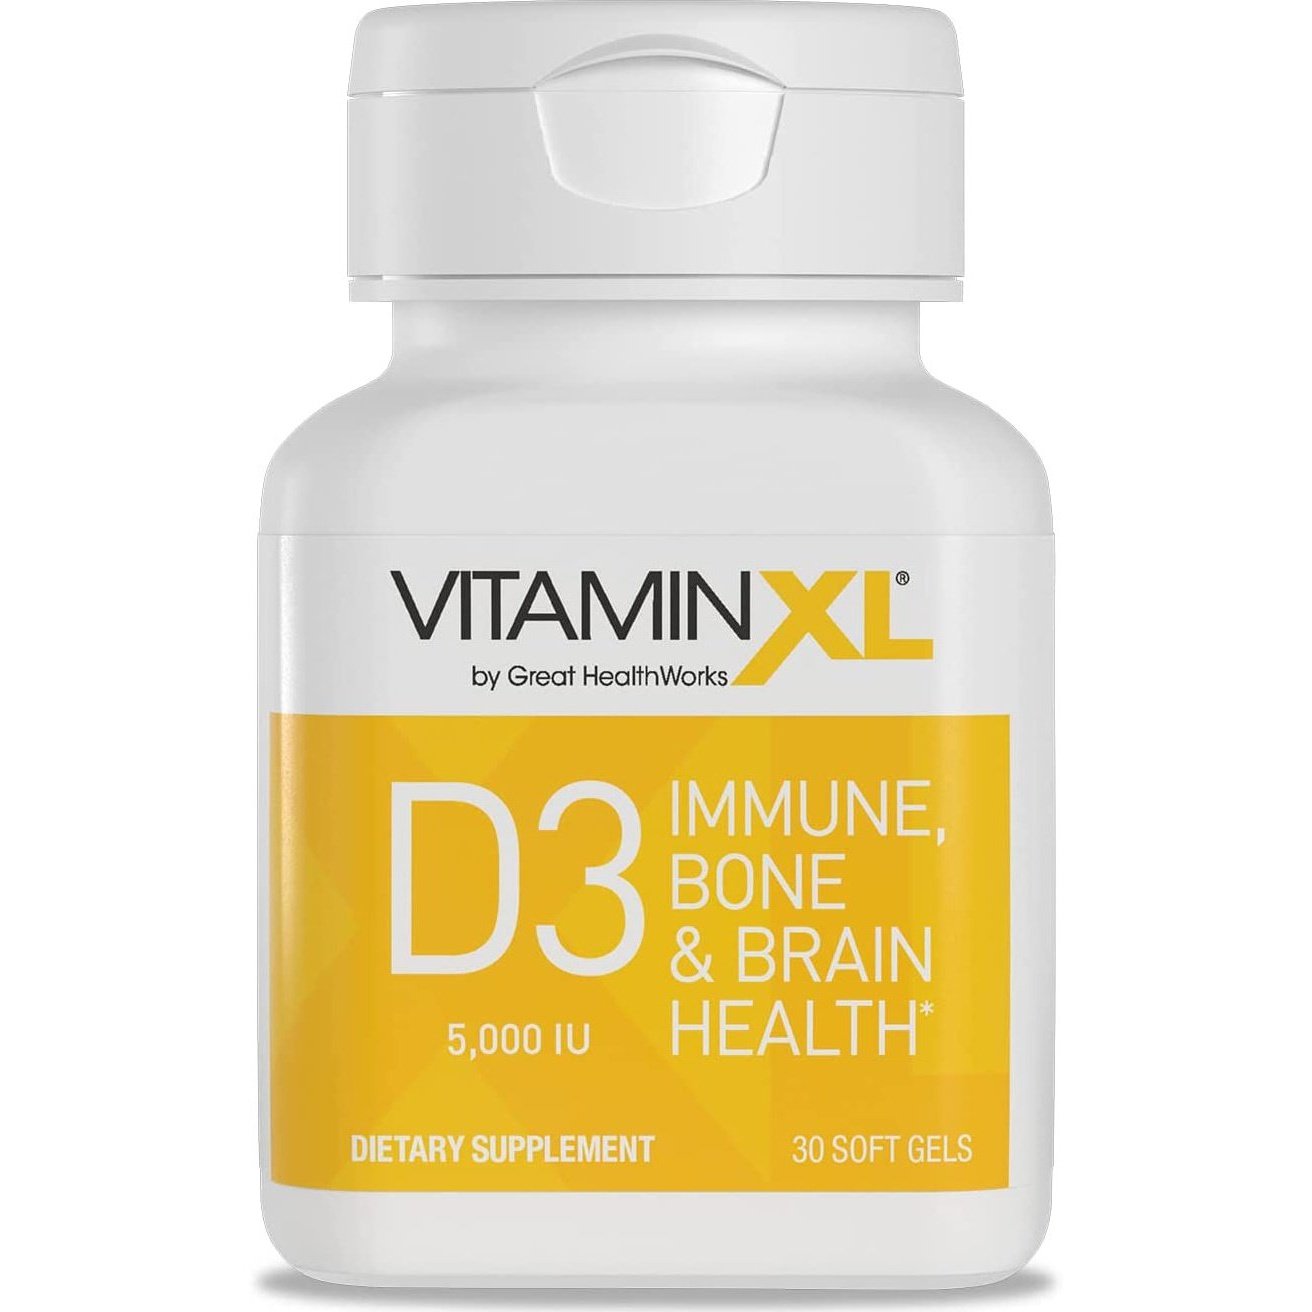 OmegaXL 120 Softgels (60 x 2 Pack) & VitaminXL D3 High Potency Daily Vitamin D 5000 IU 125mcg(30 Softgels)